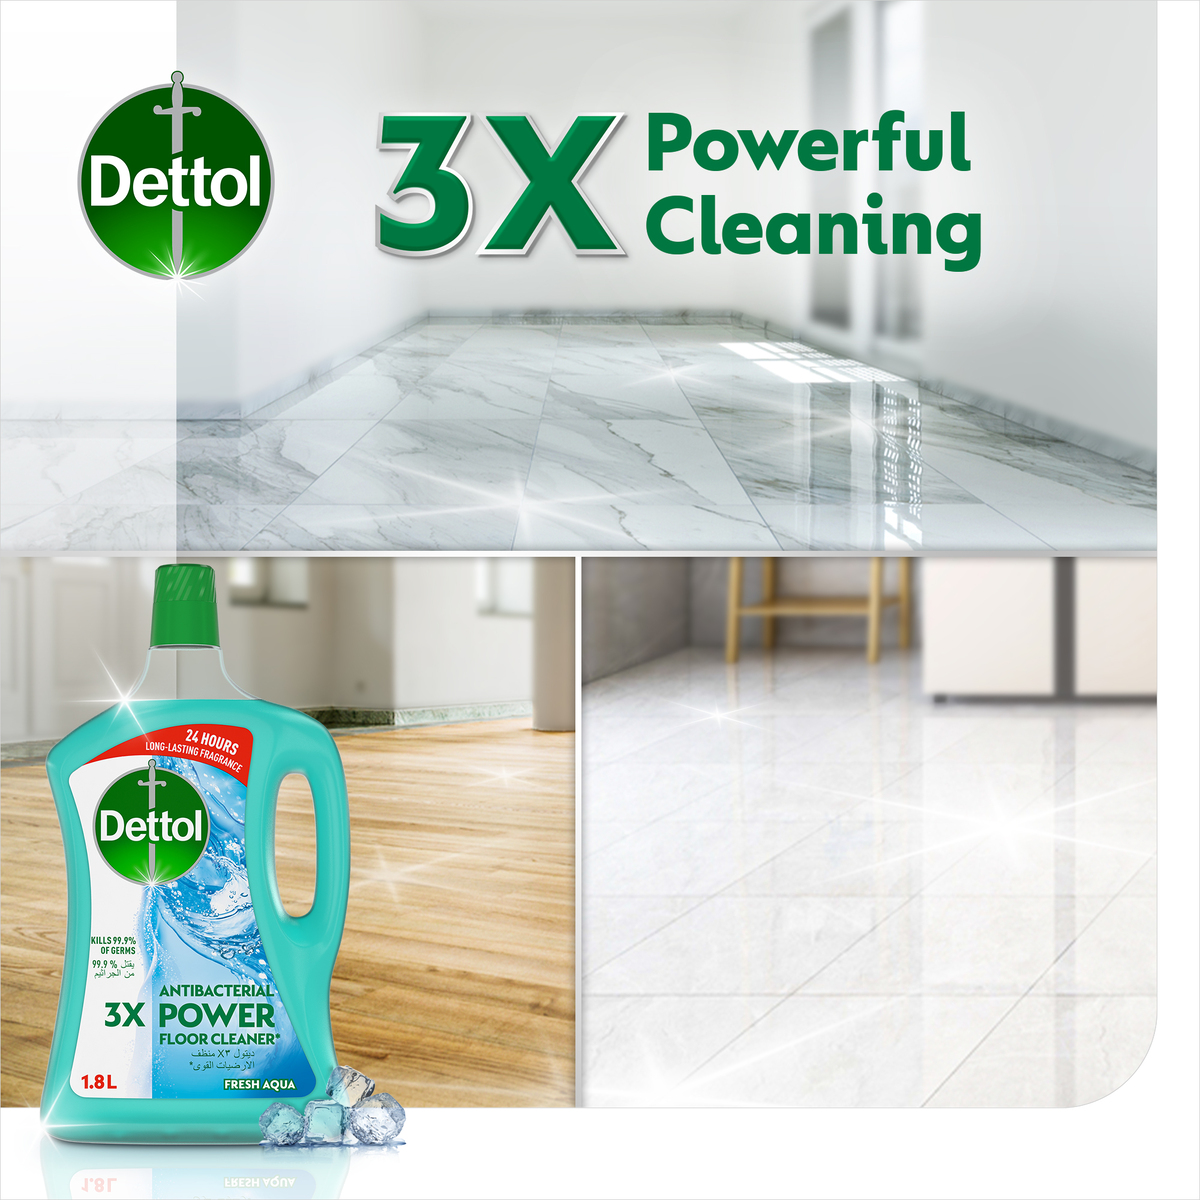 Dettol Fresh Aqua Antibacterial Power Floor Cleaner 1.8 Litres